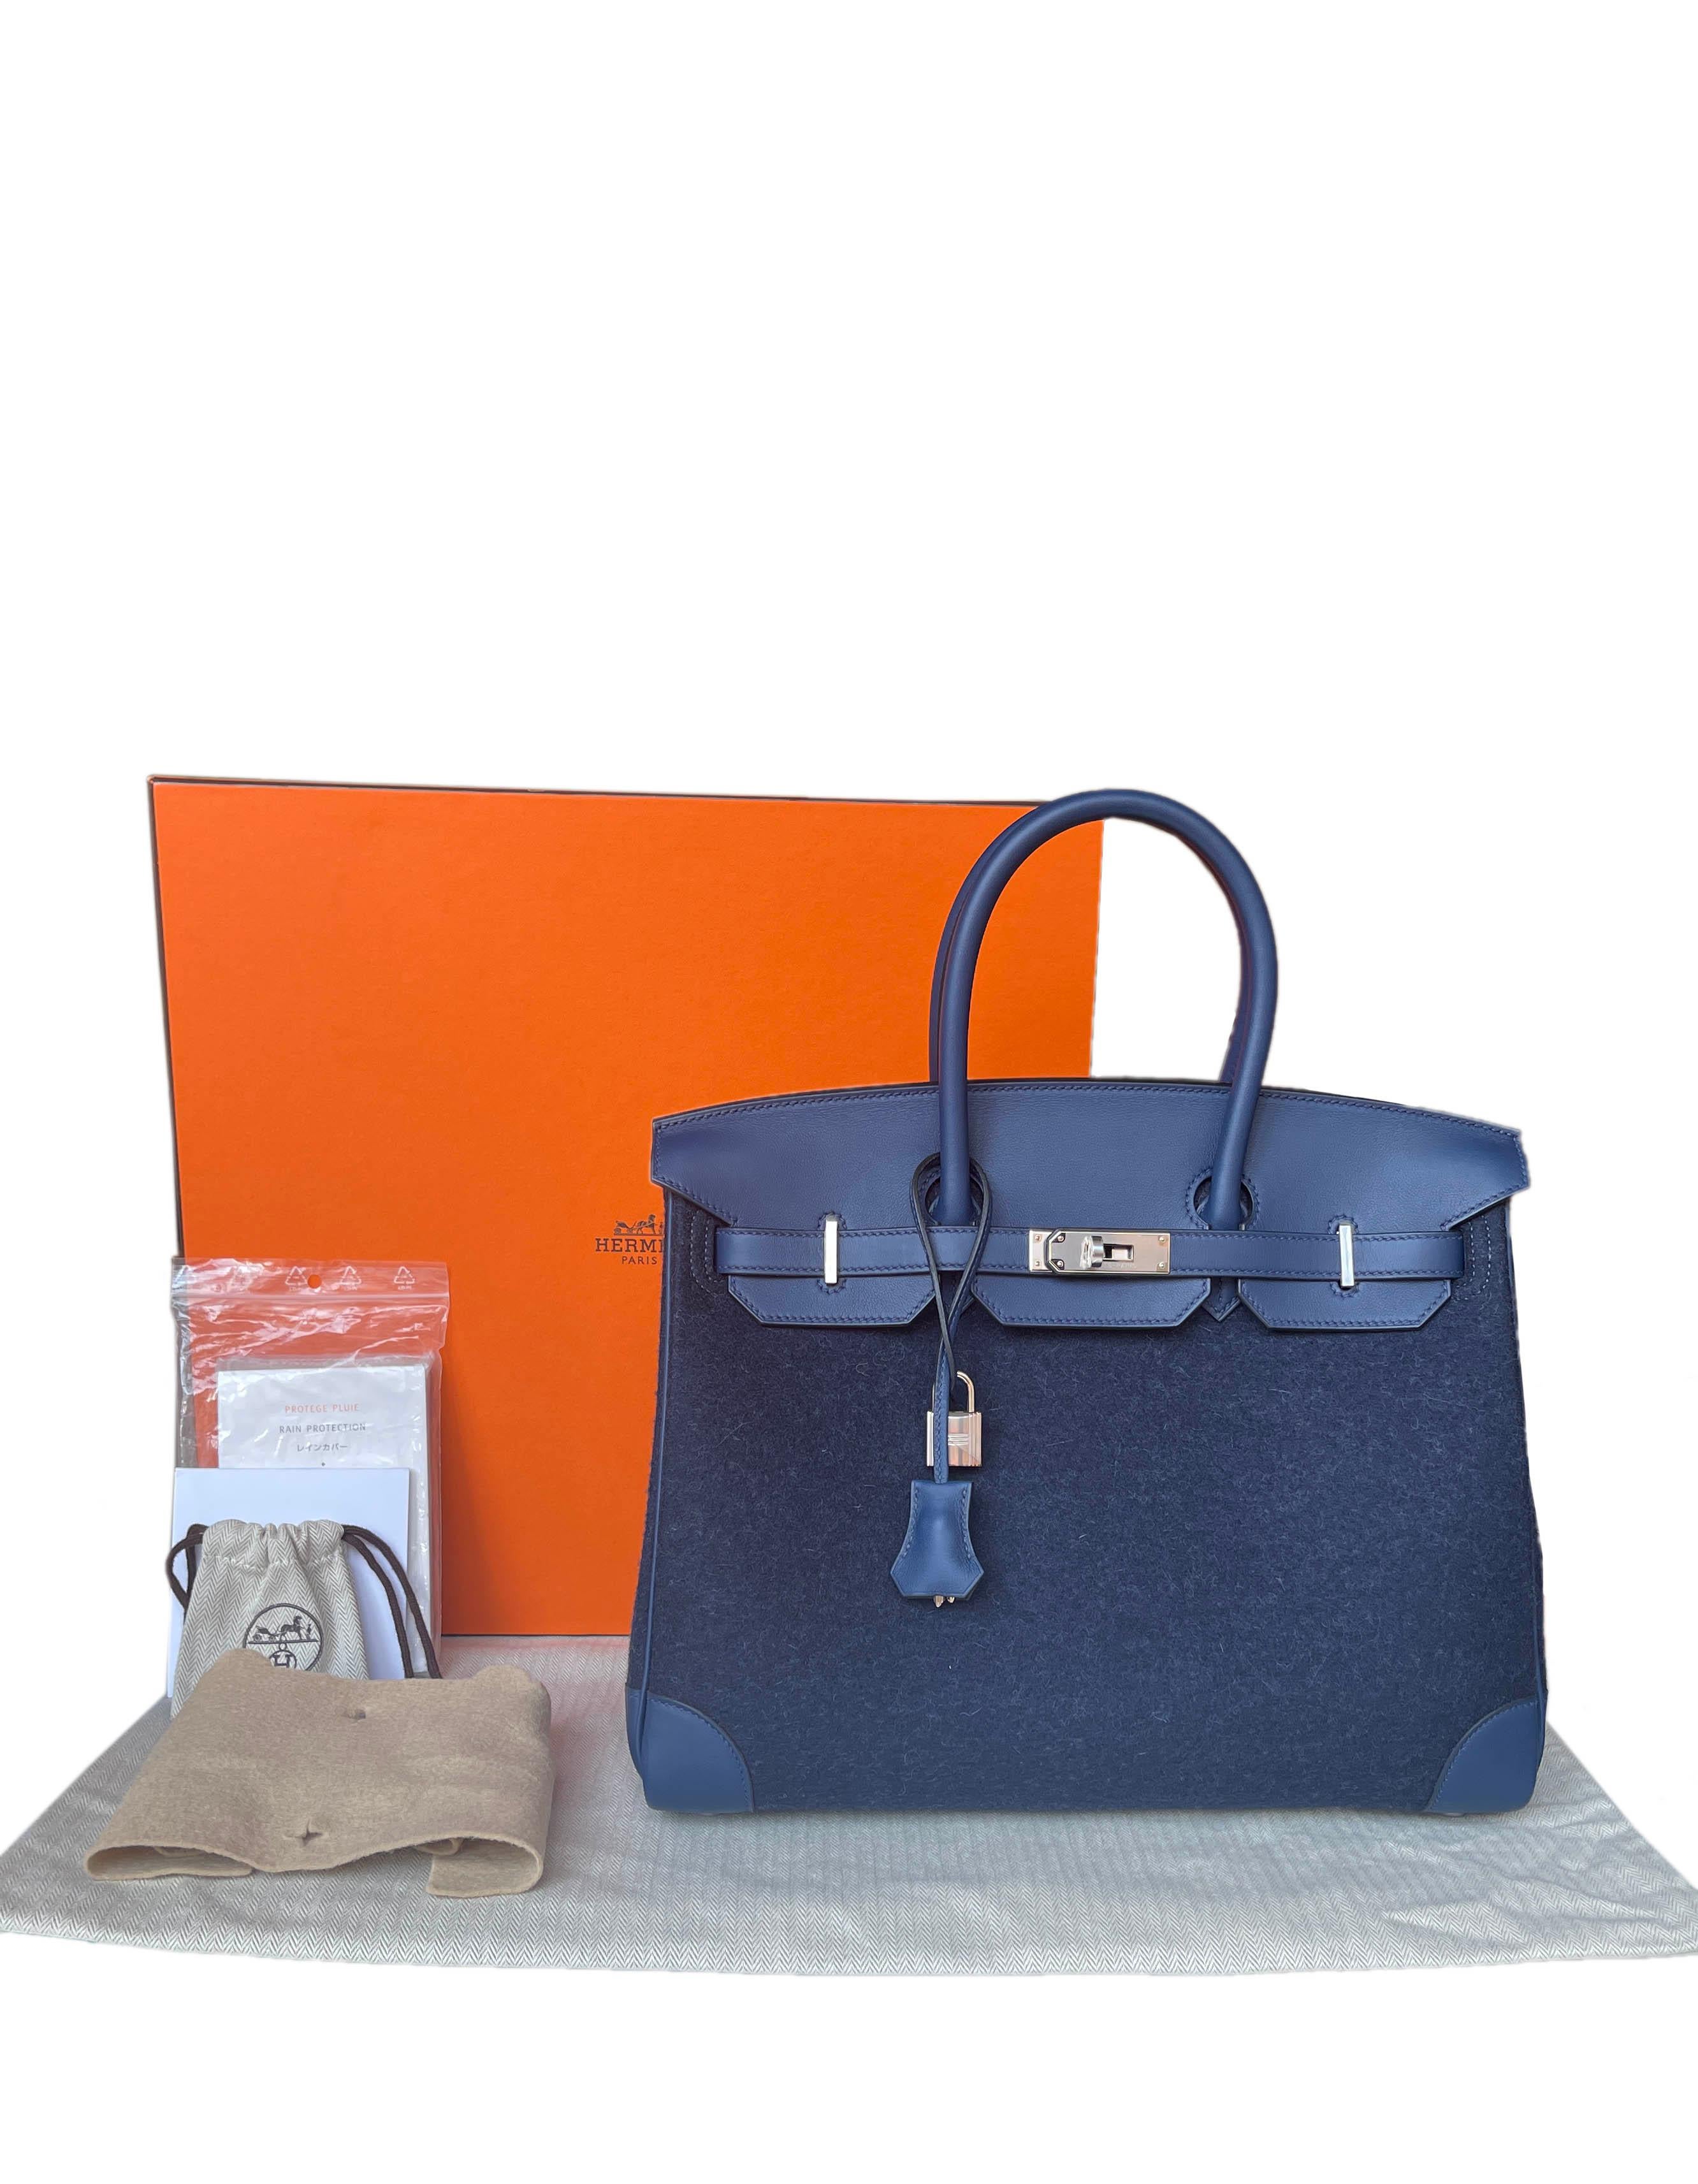 Hermes RARE Bleu Nuit / Blue De Malte Feutre/ Swift 35cm Birkin Bag w/ Box & DB 7